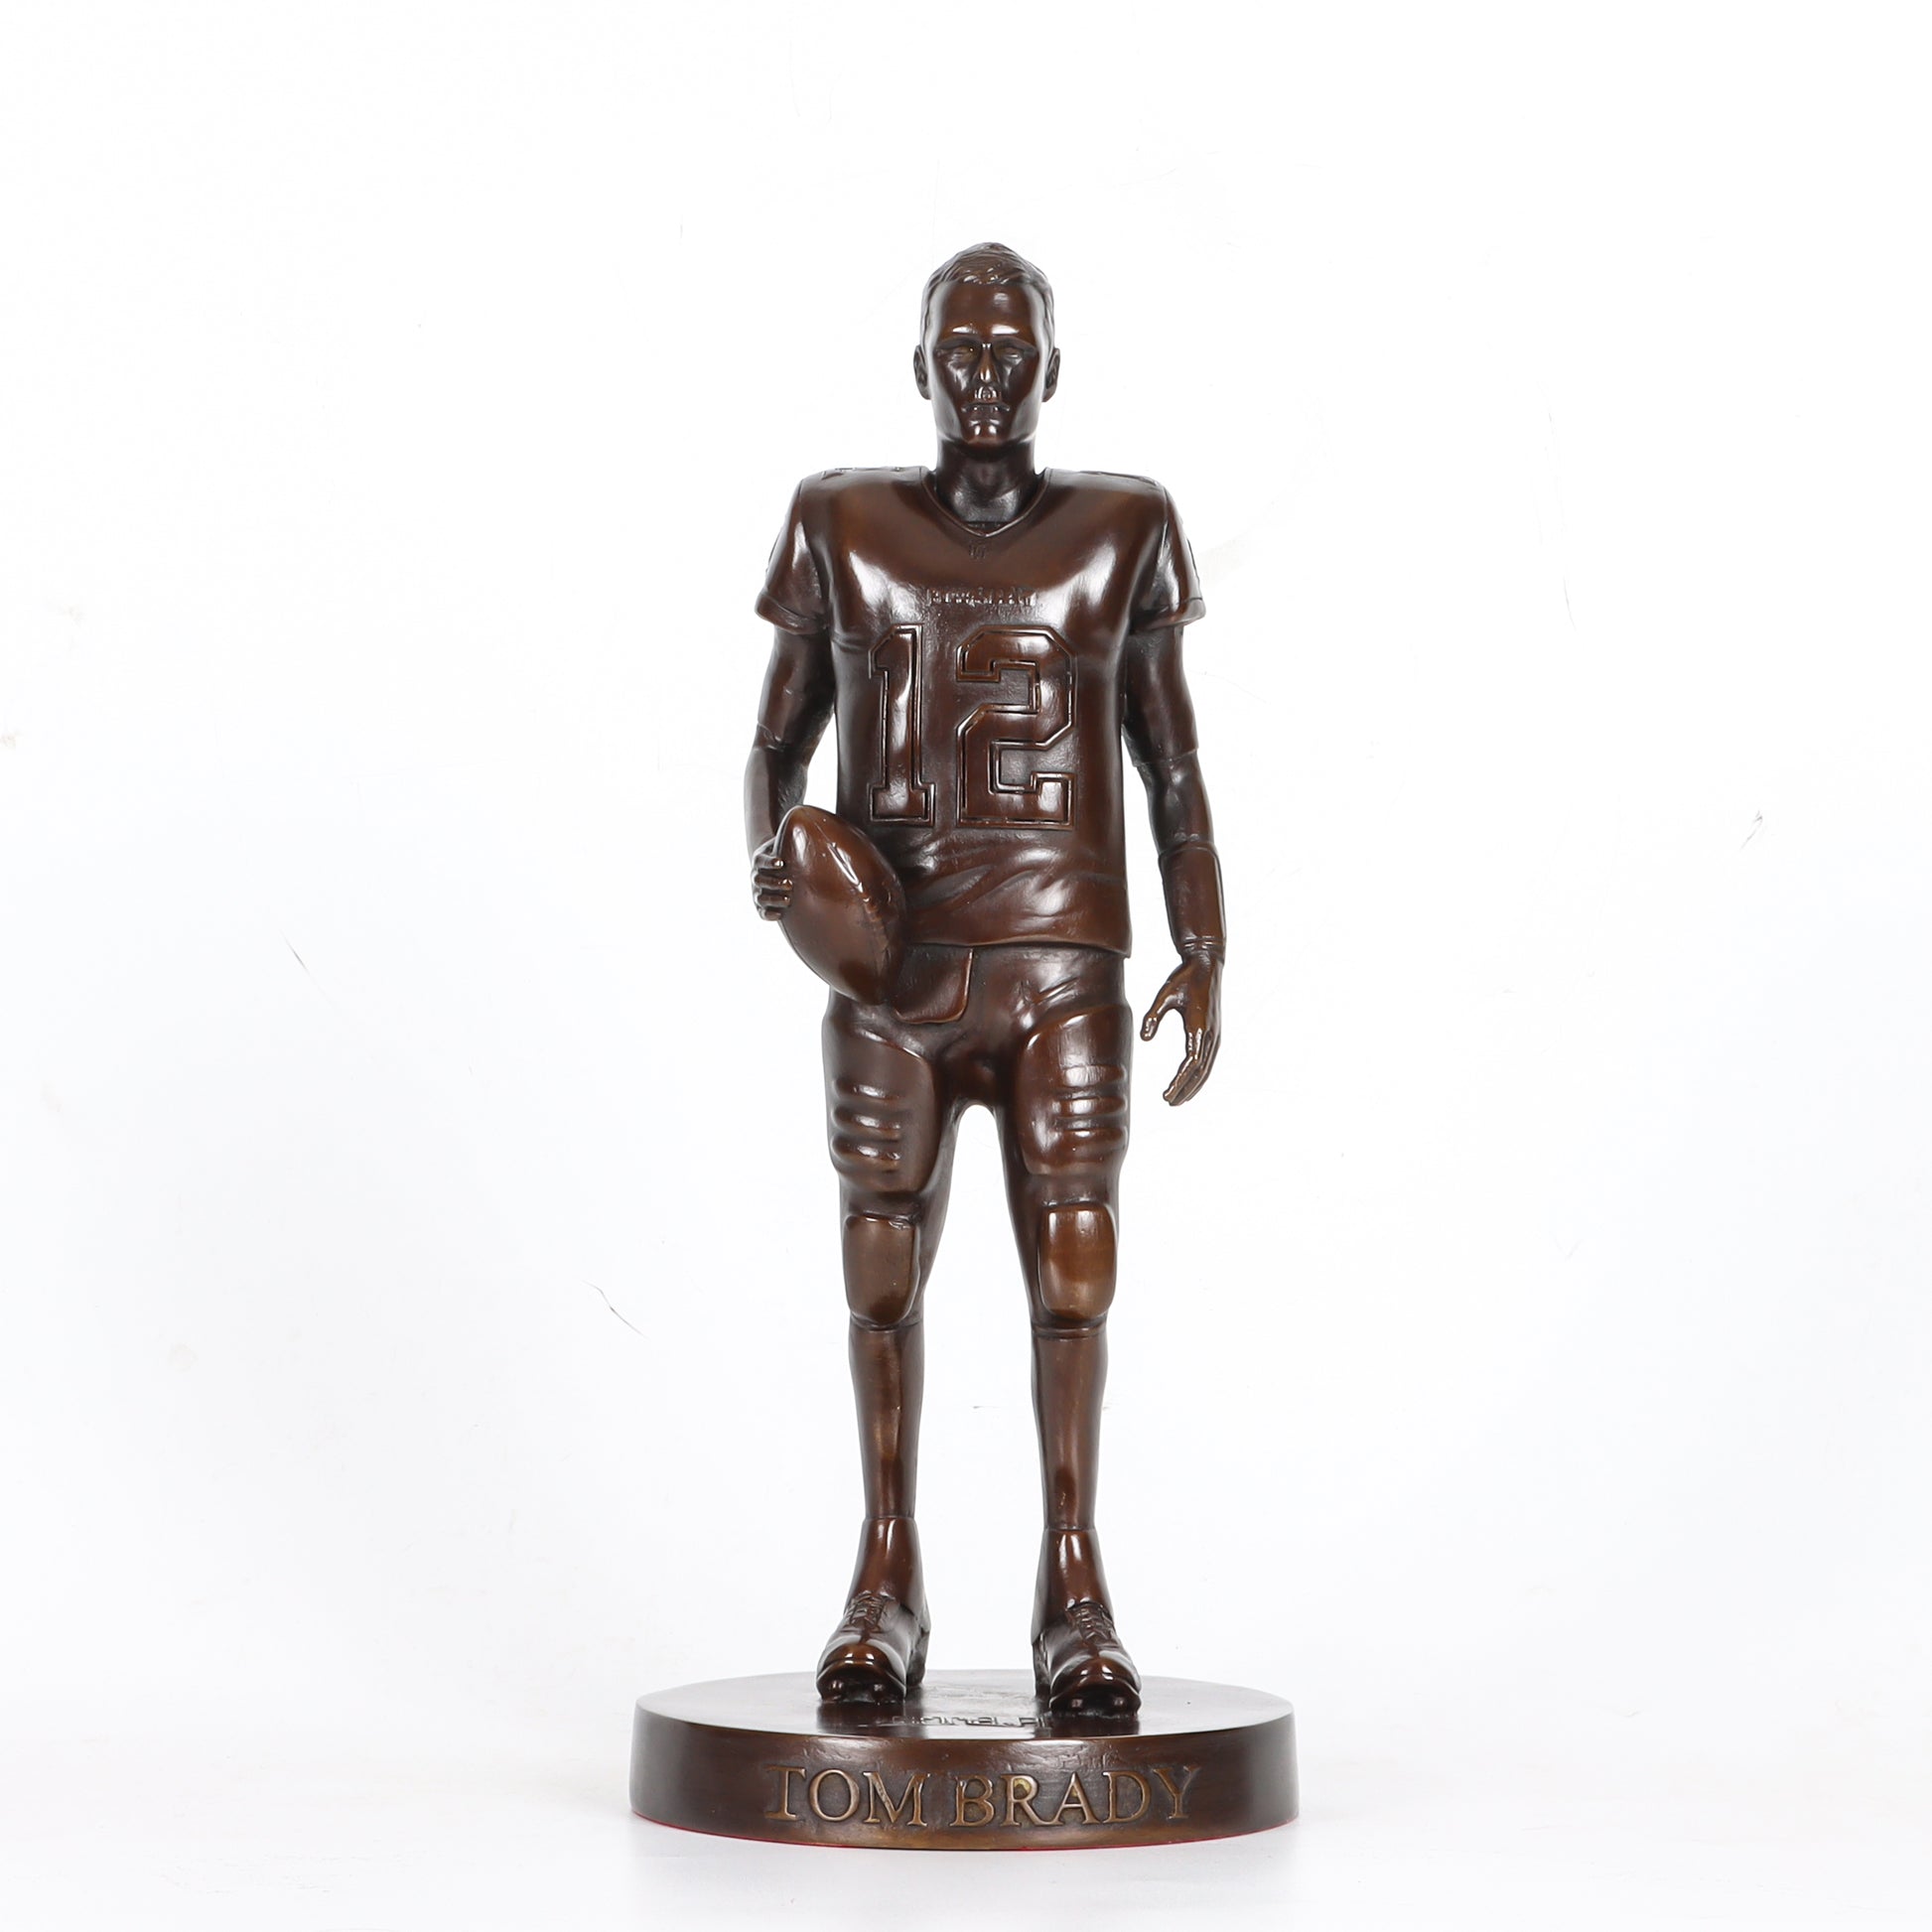 Tom Brady Statue Figurine 2